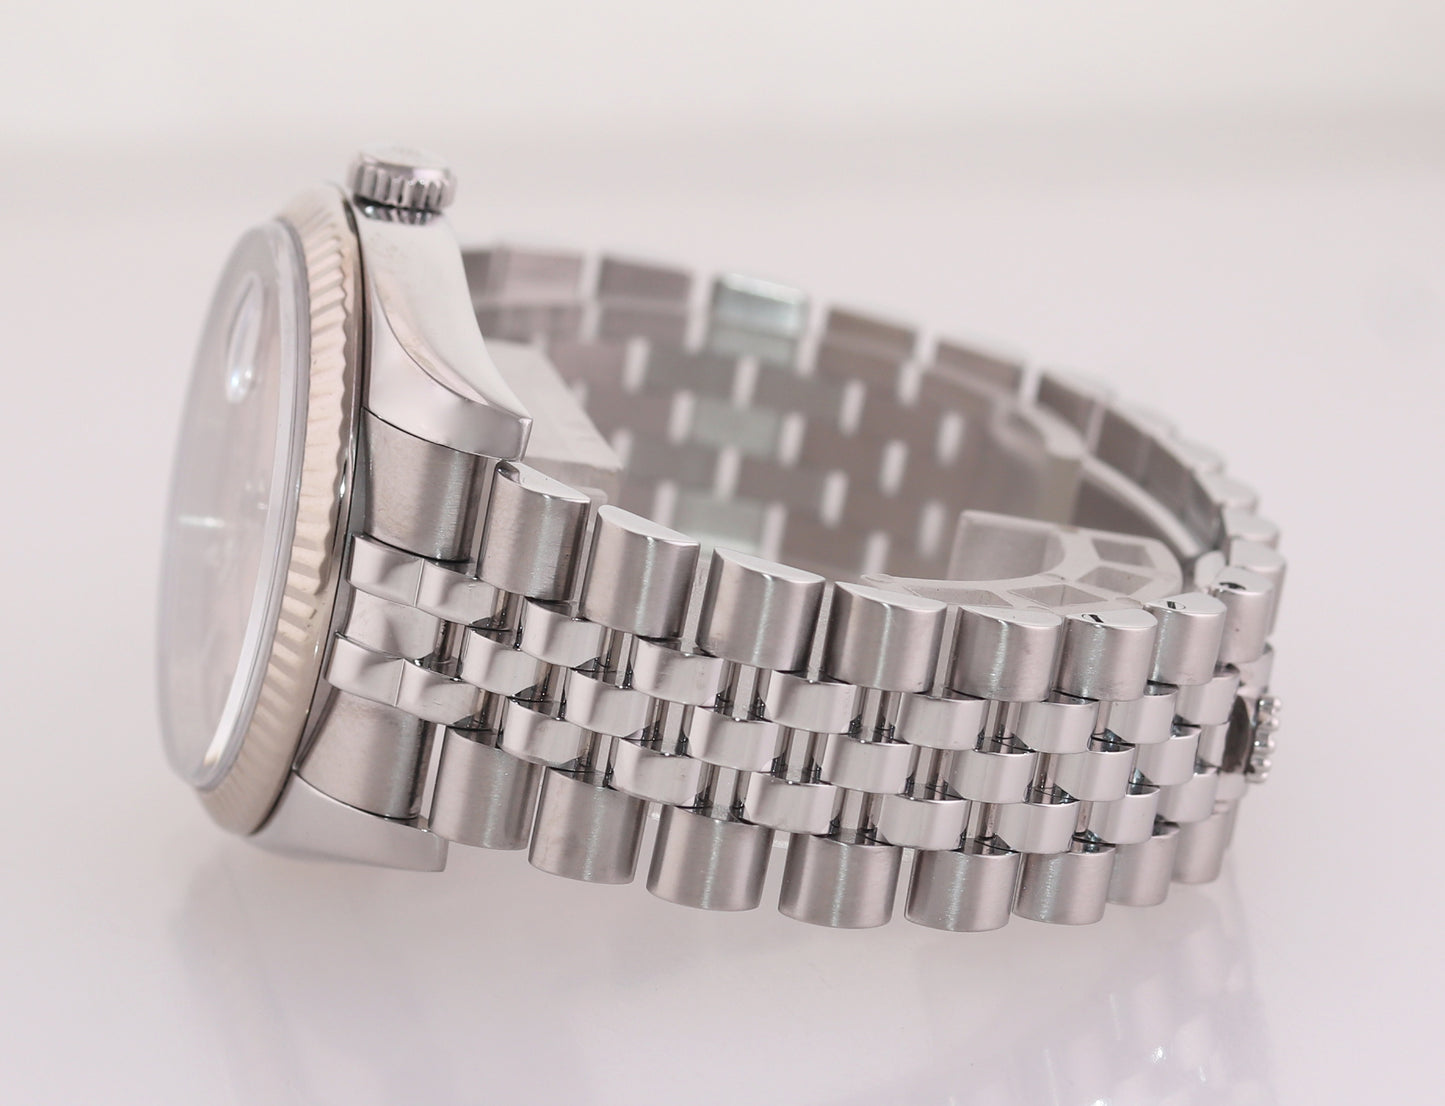 2012 MINT Rolex DateJust Steel White Gold Fluted Pink 116234 36mm Jubilee Watch